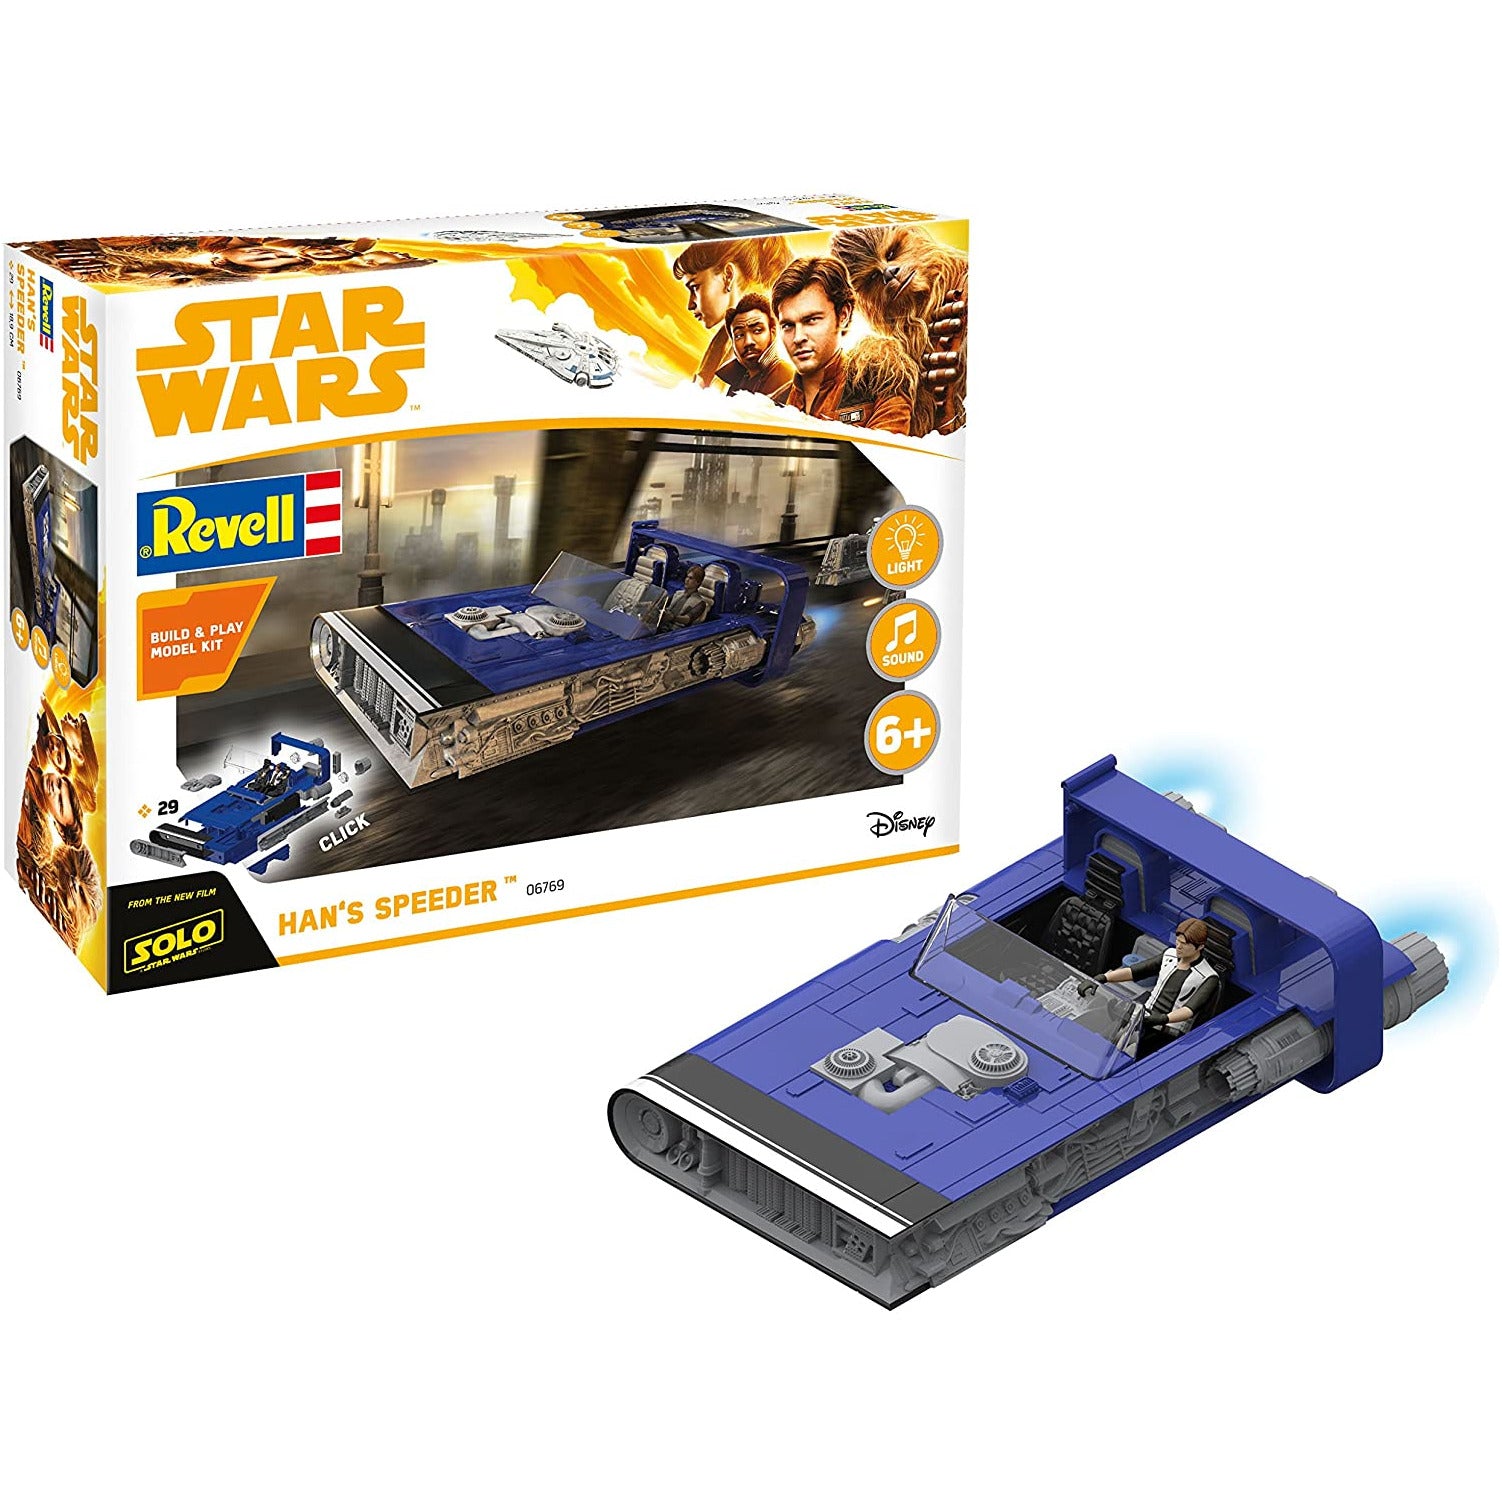 Han Solo Speeder #1677 Star Wars Vehicle Model Kit by Revell